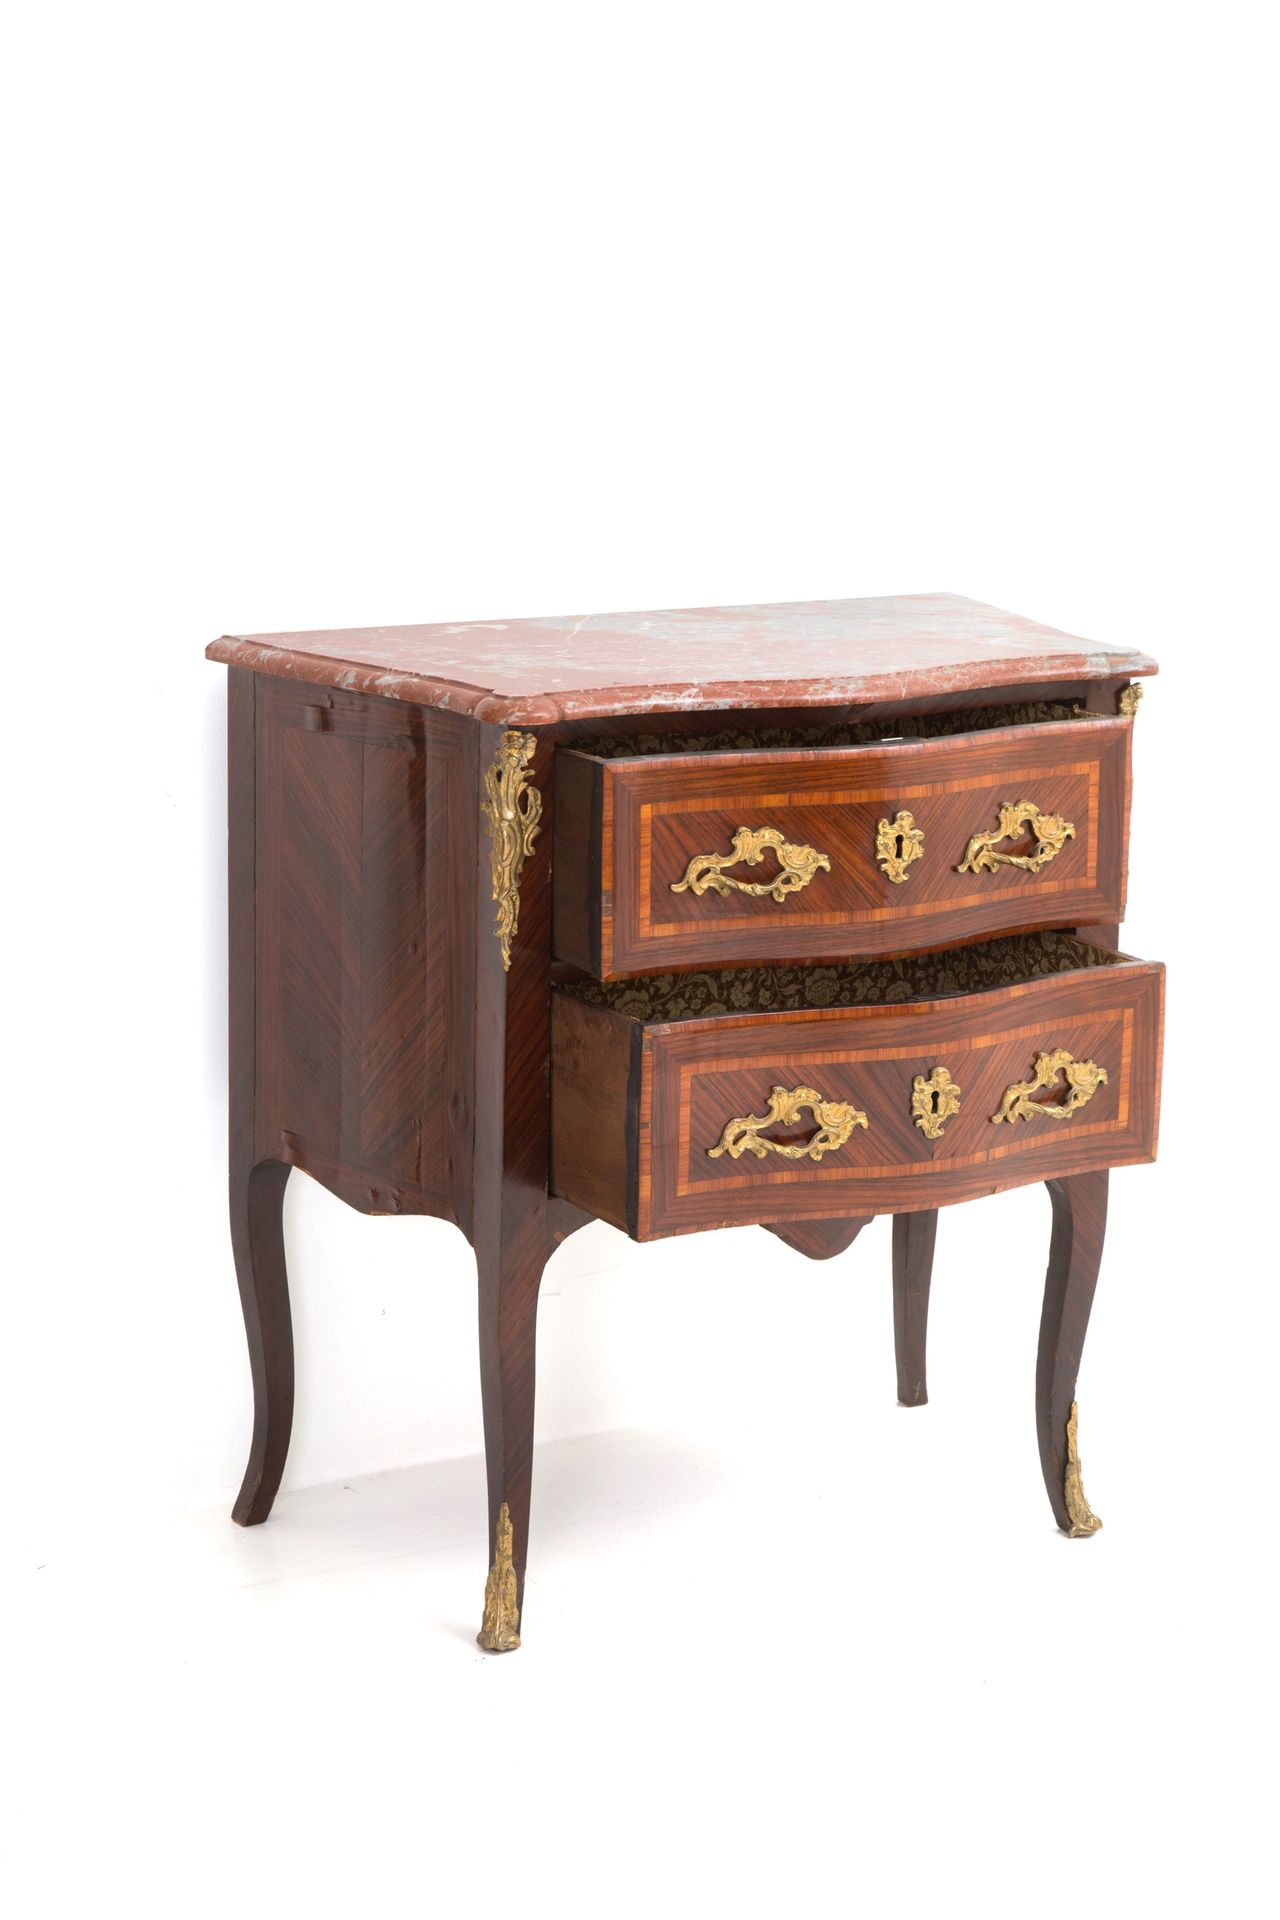 Small chest of drawers 小木制抽屉柜，粉红色大理石桌面和镀金铜配件。法国。19世纪晚期。缺陷。83x81x44厘米左右。